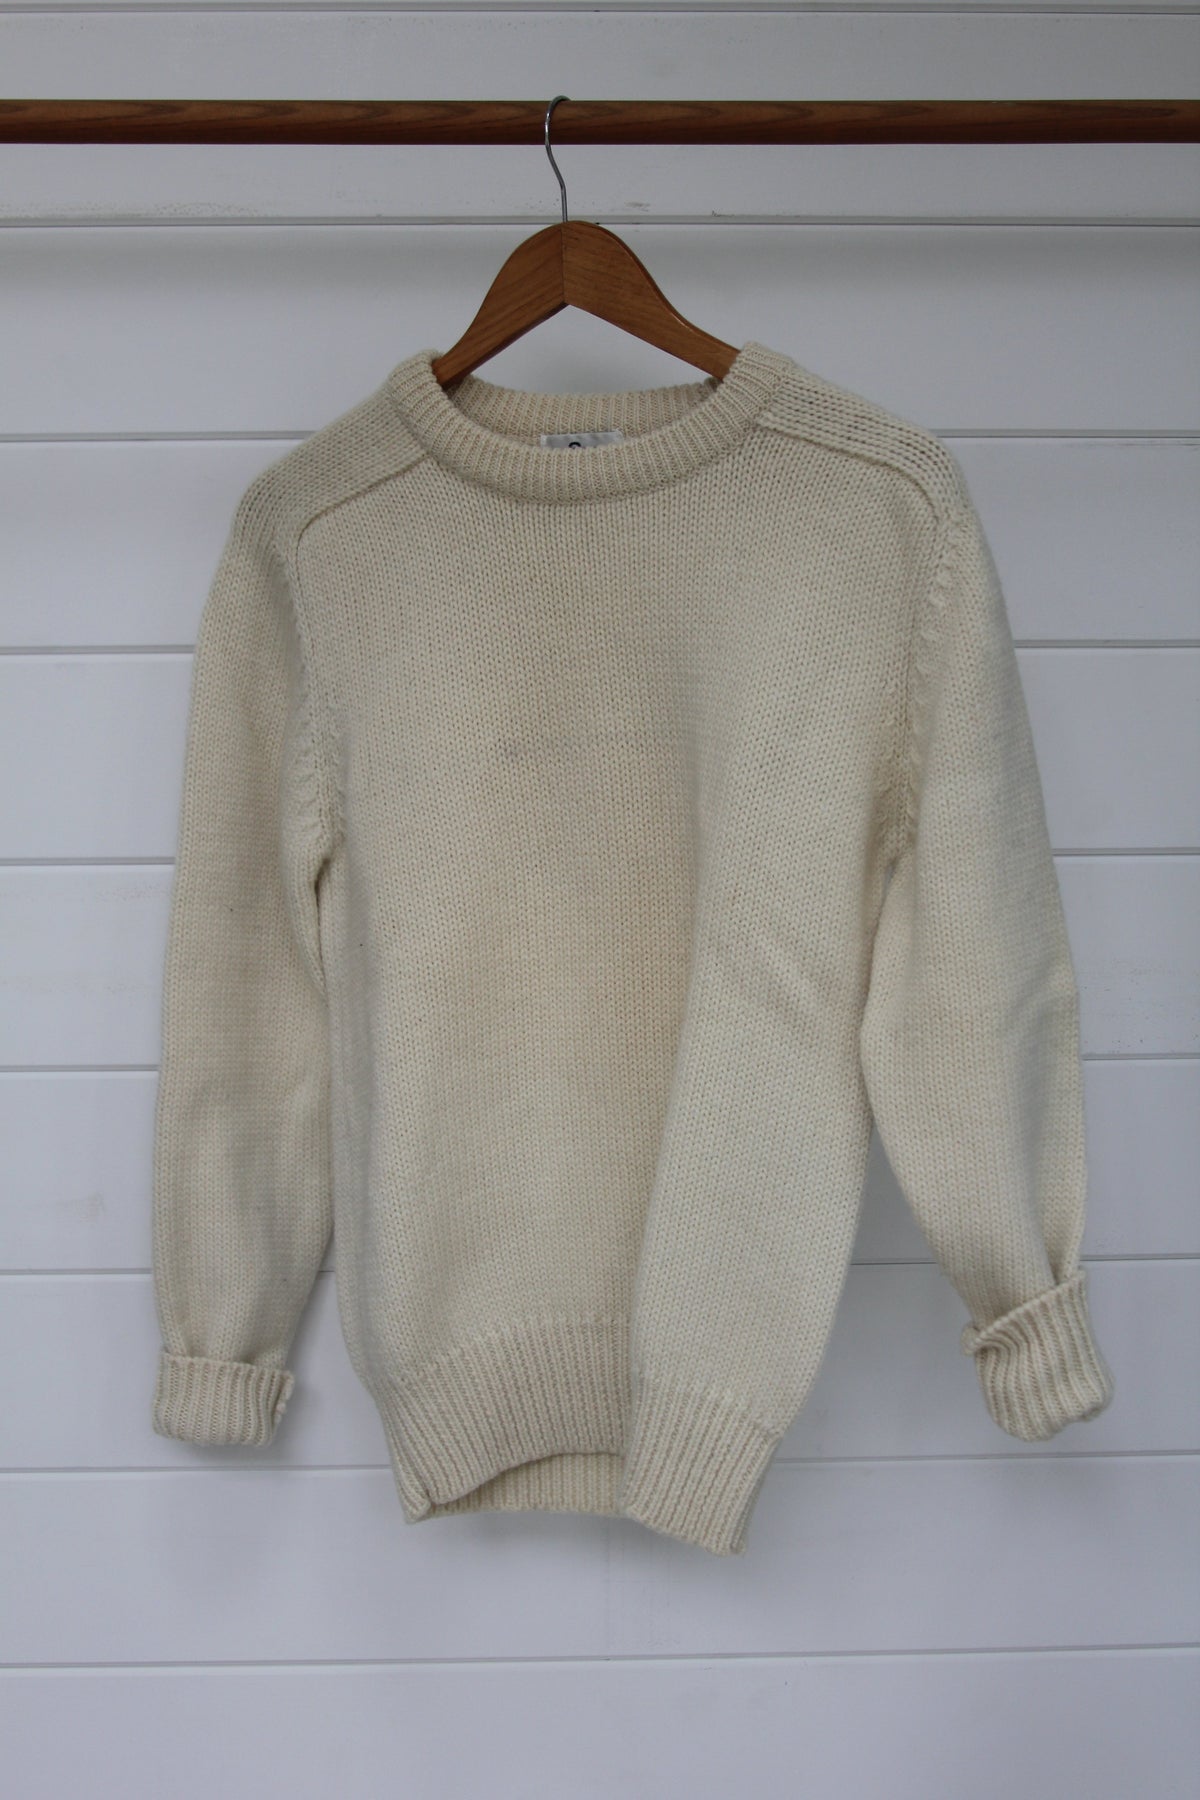 Vintage Woolrich Sweater - Diamonds & Rust